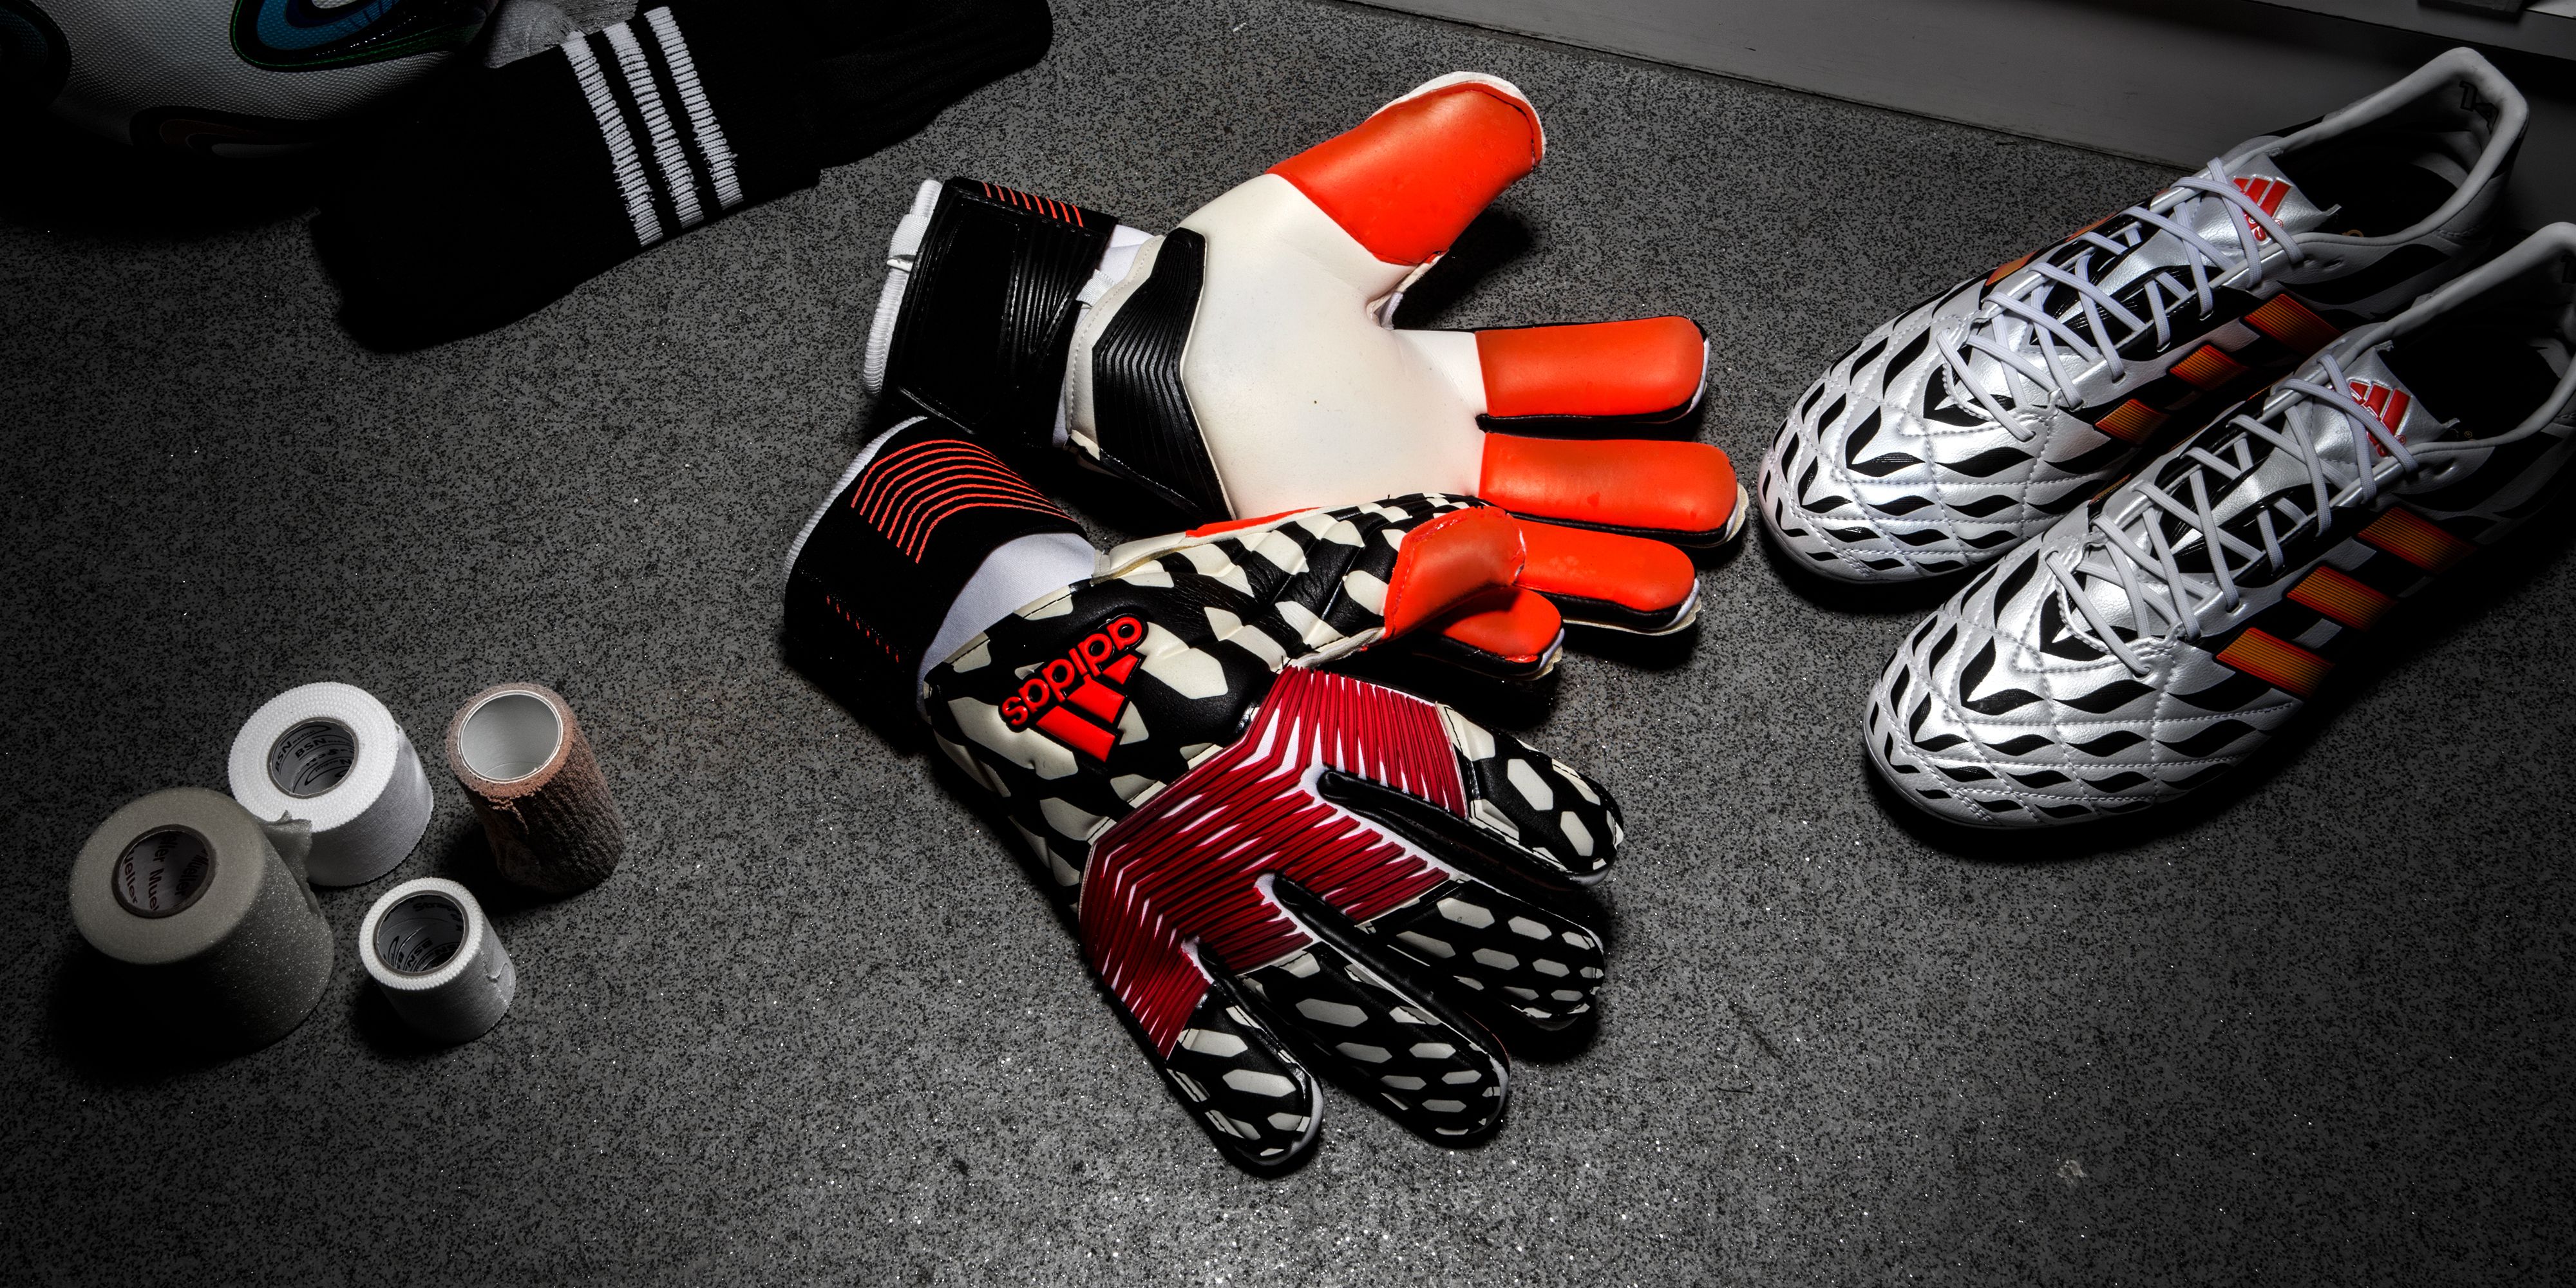 adidas battle pack gloves. The 12elfth Man